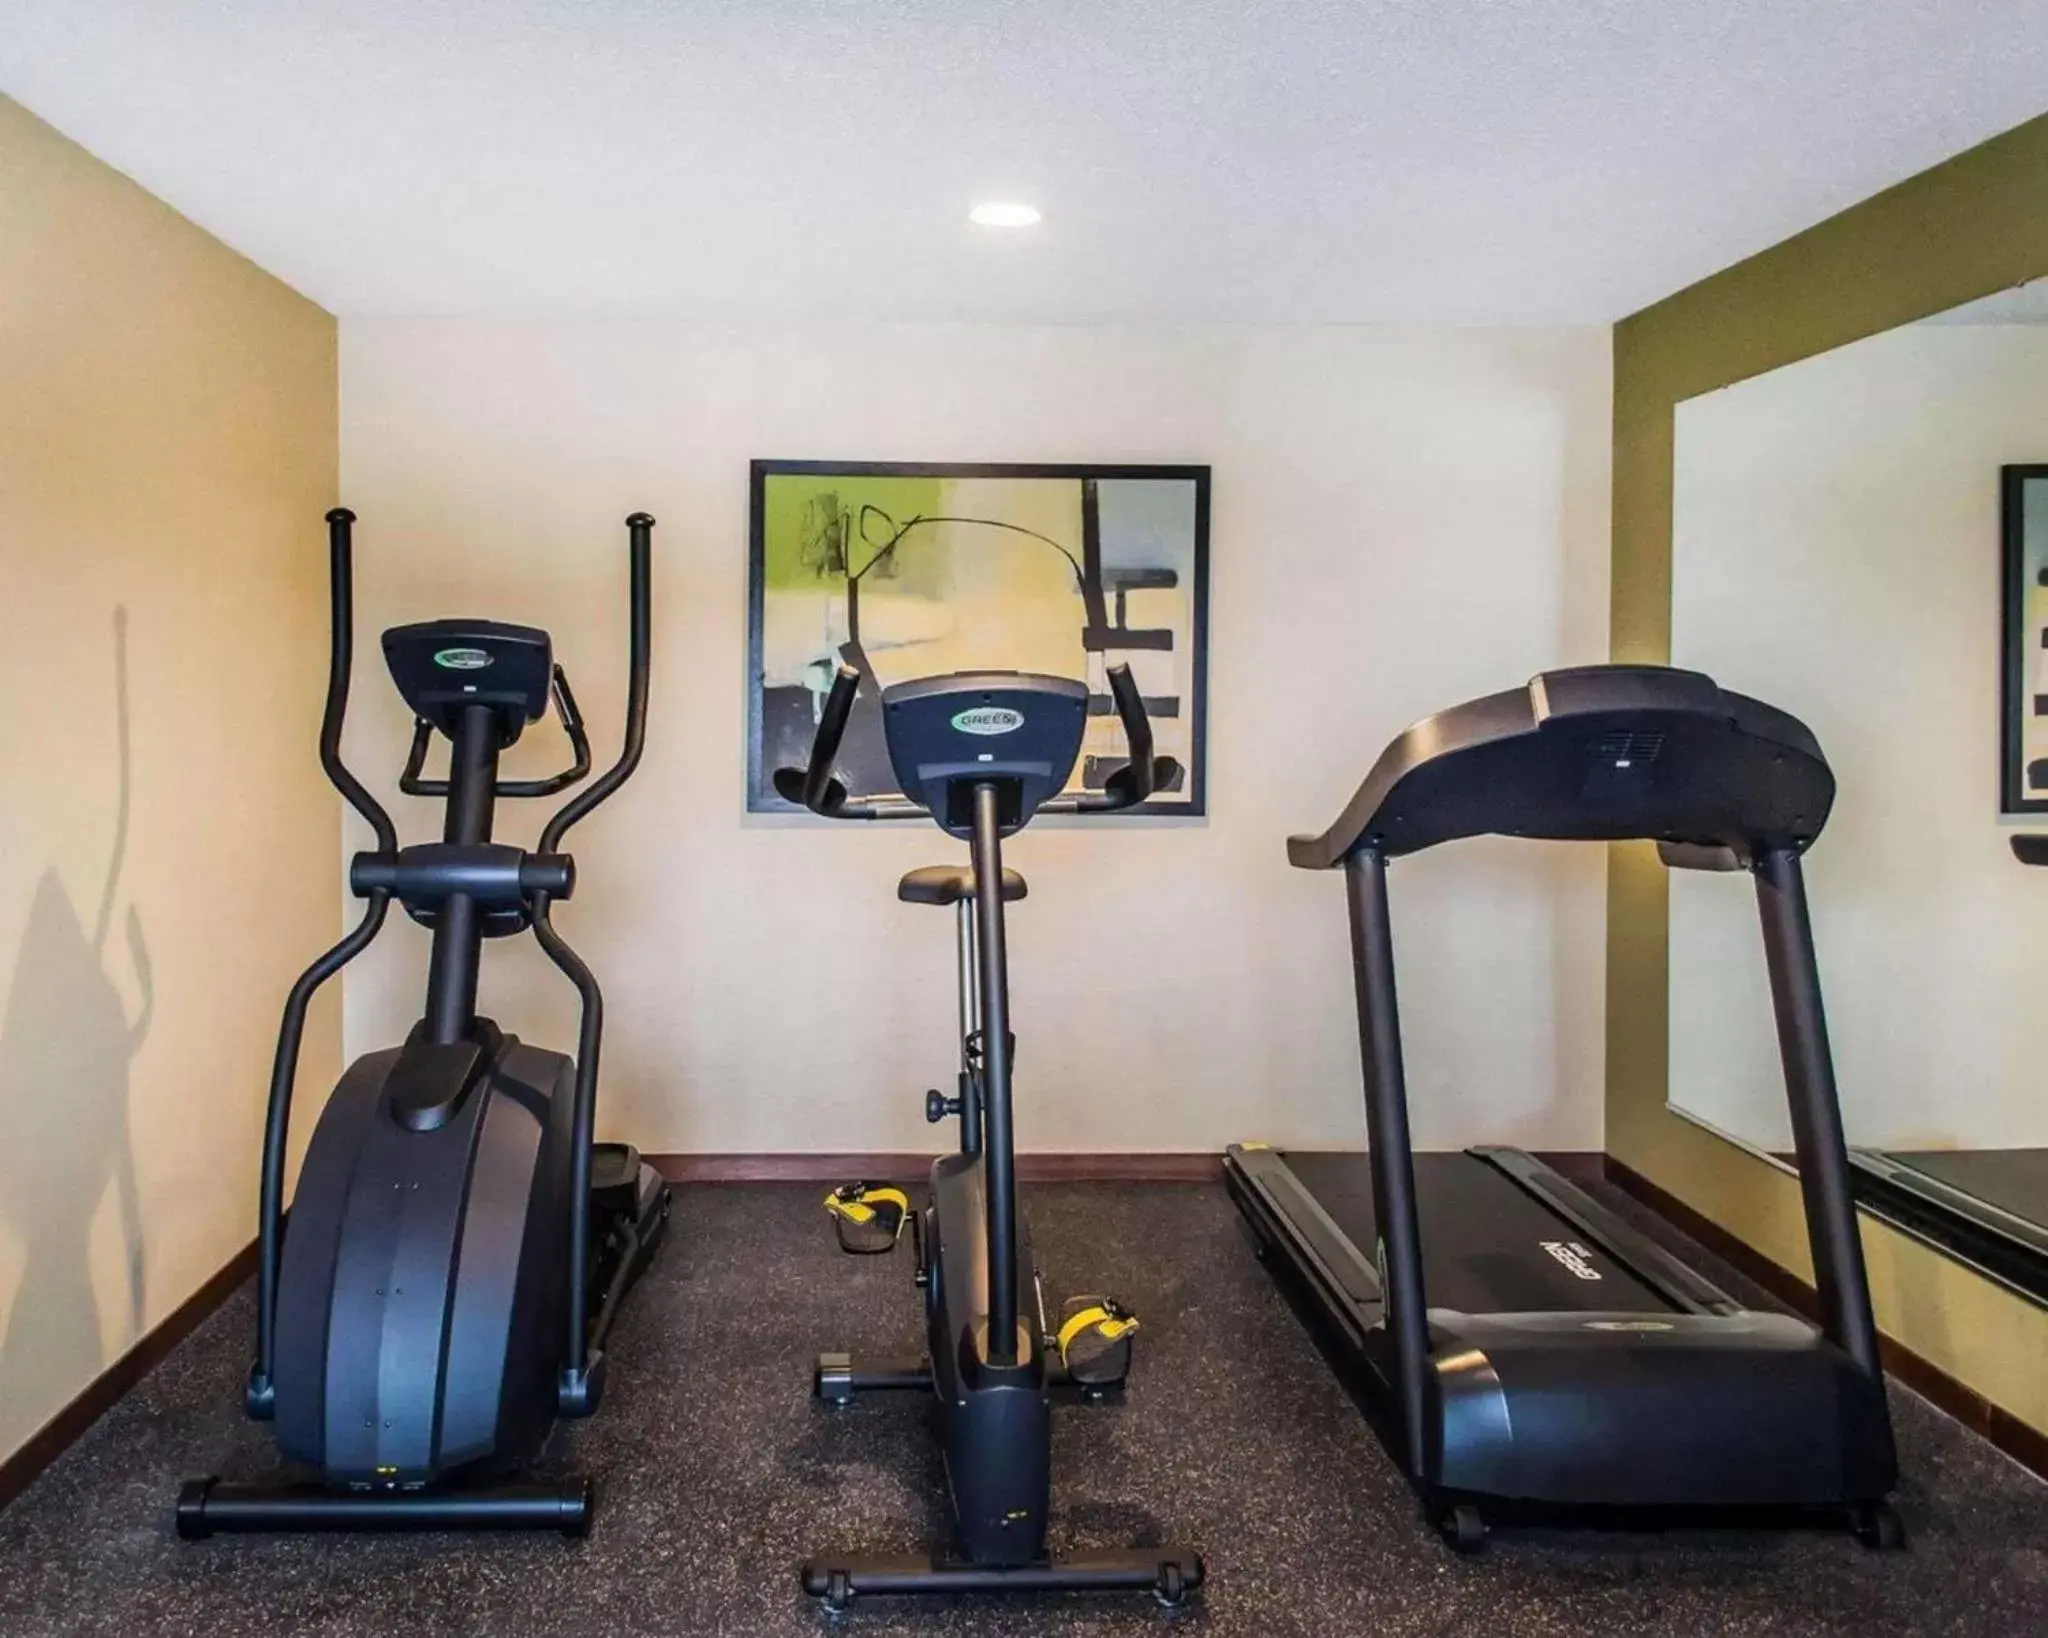 Fitness centre/facilities, Fitness Center/Facilities in Quality Inn Streetsboro